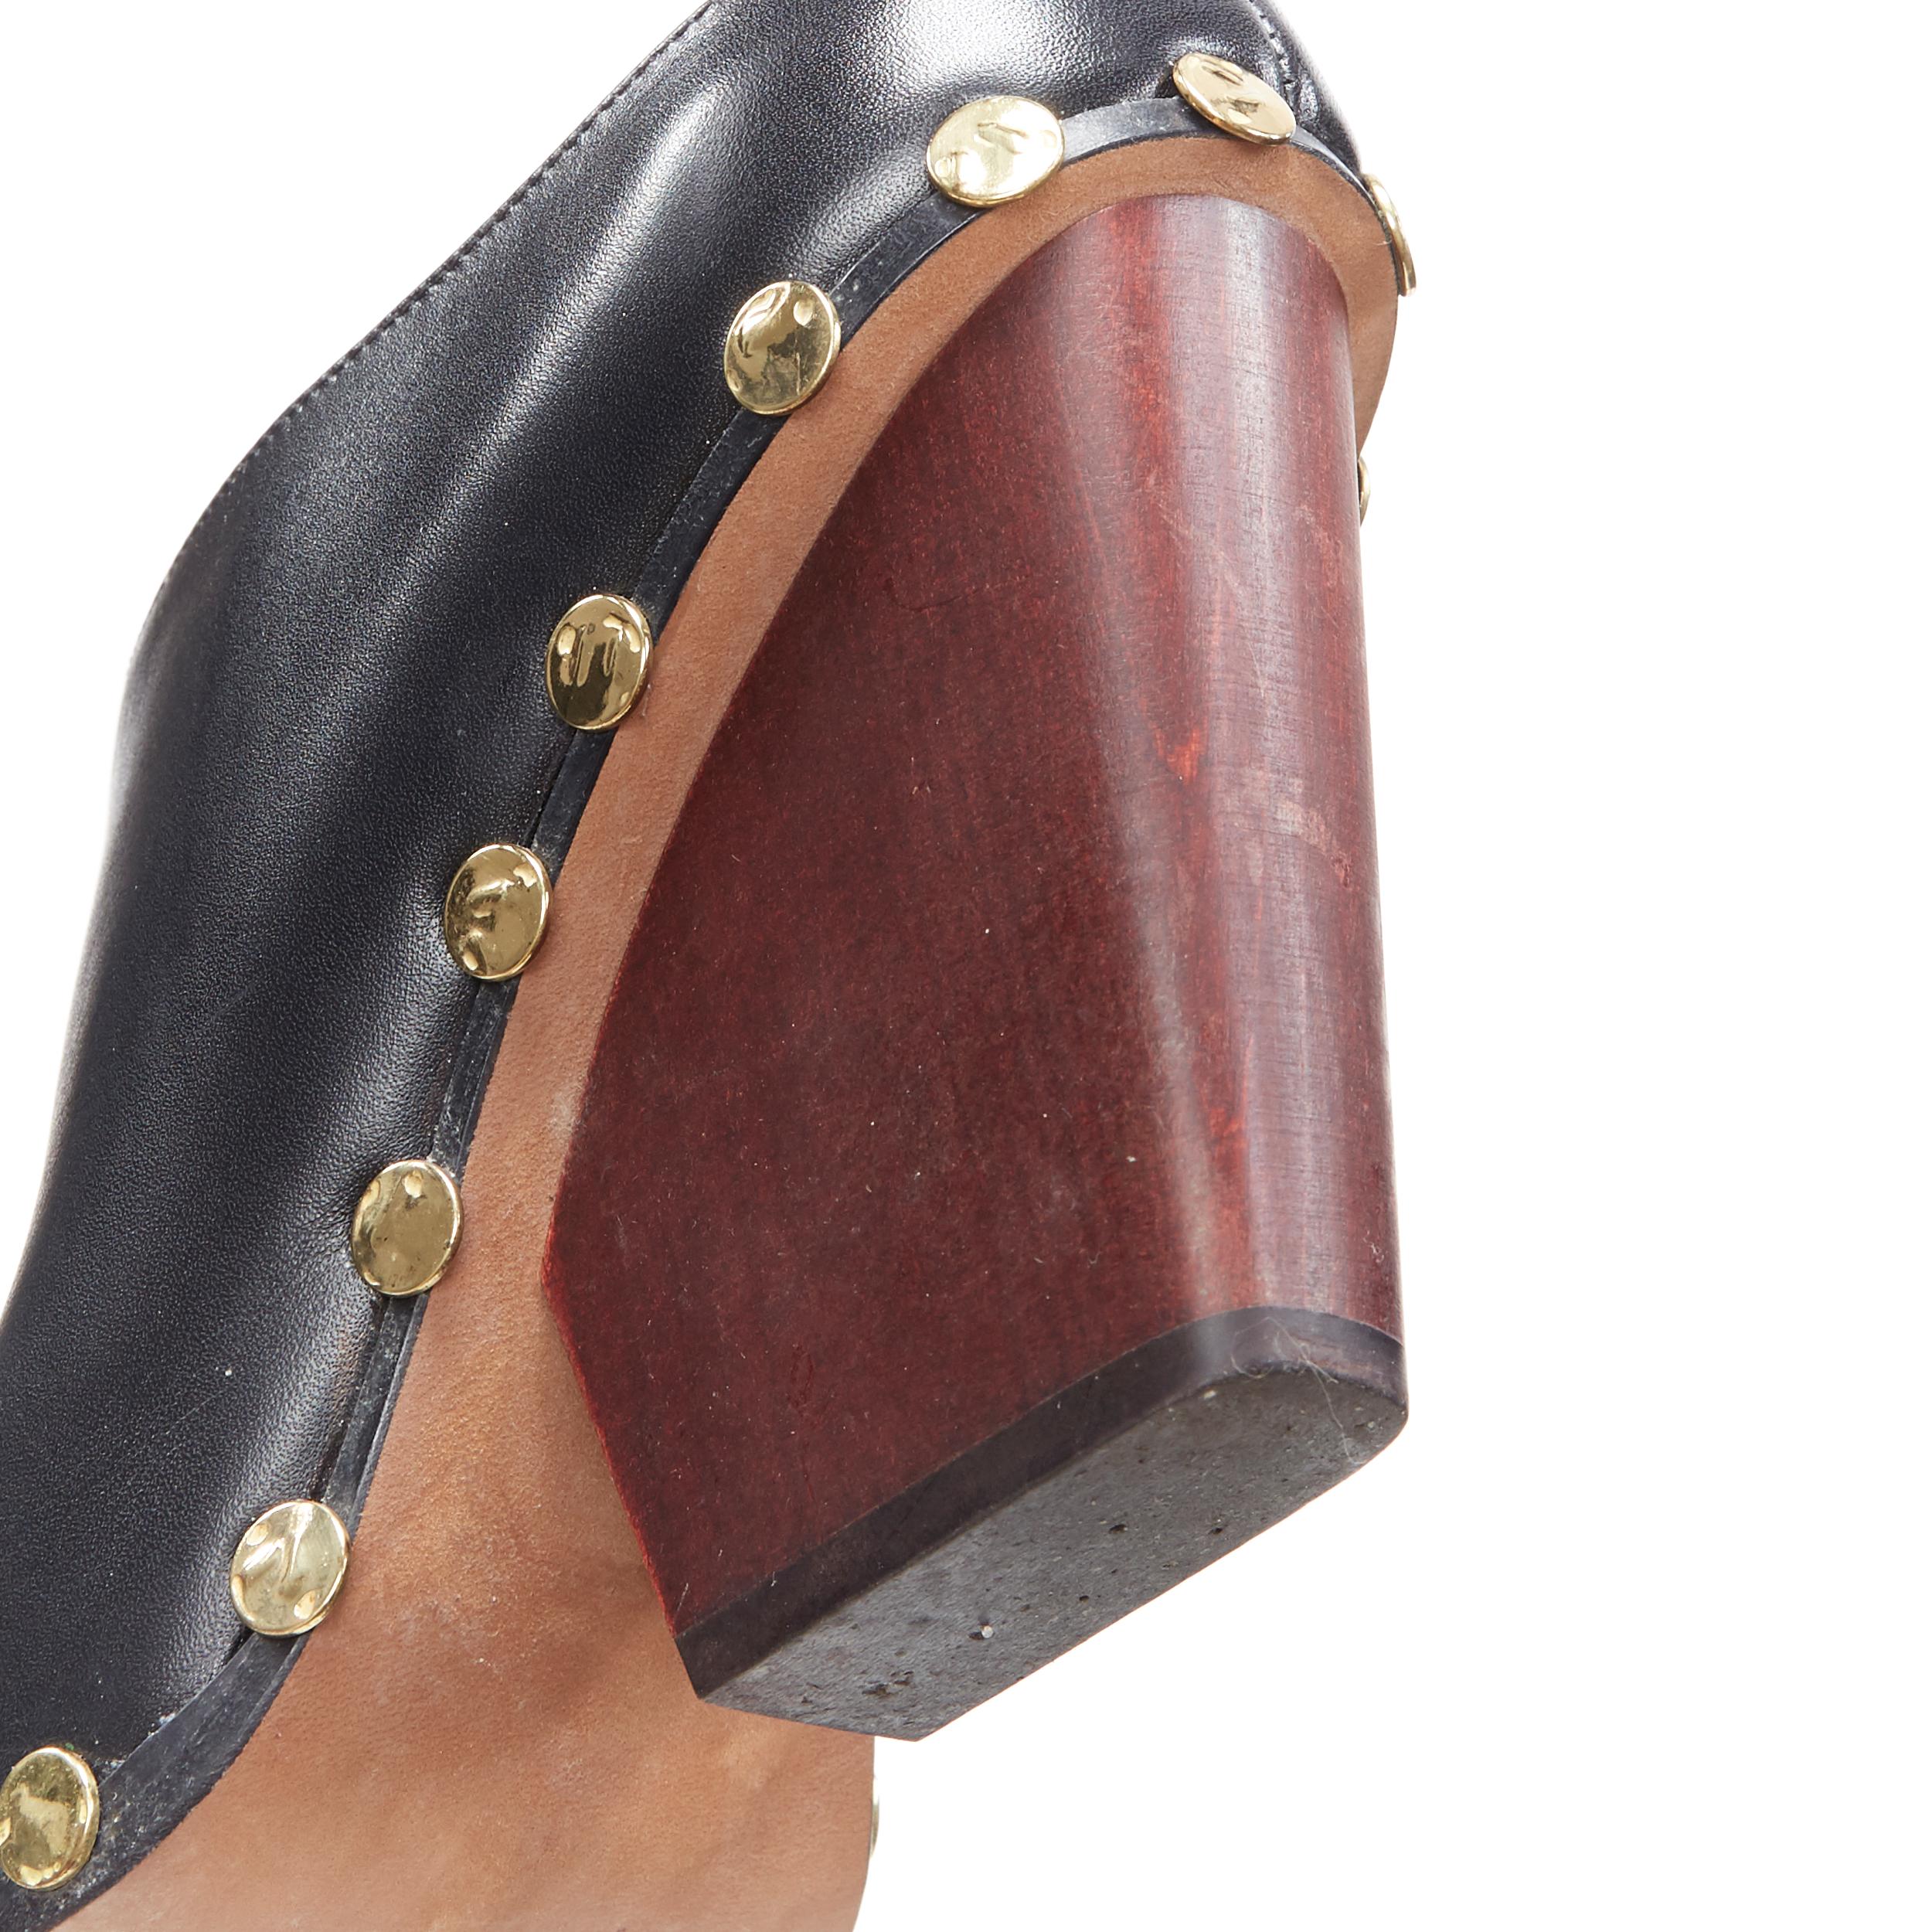 CELINE PHOEBE PHILO Rodeo High black leather point toe gold stud mule EU37 1